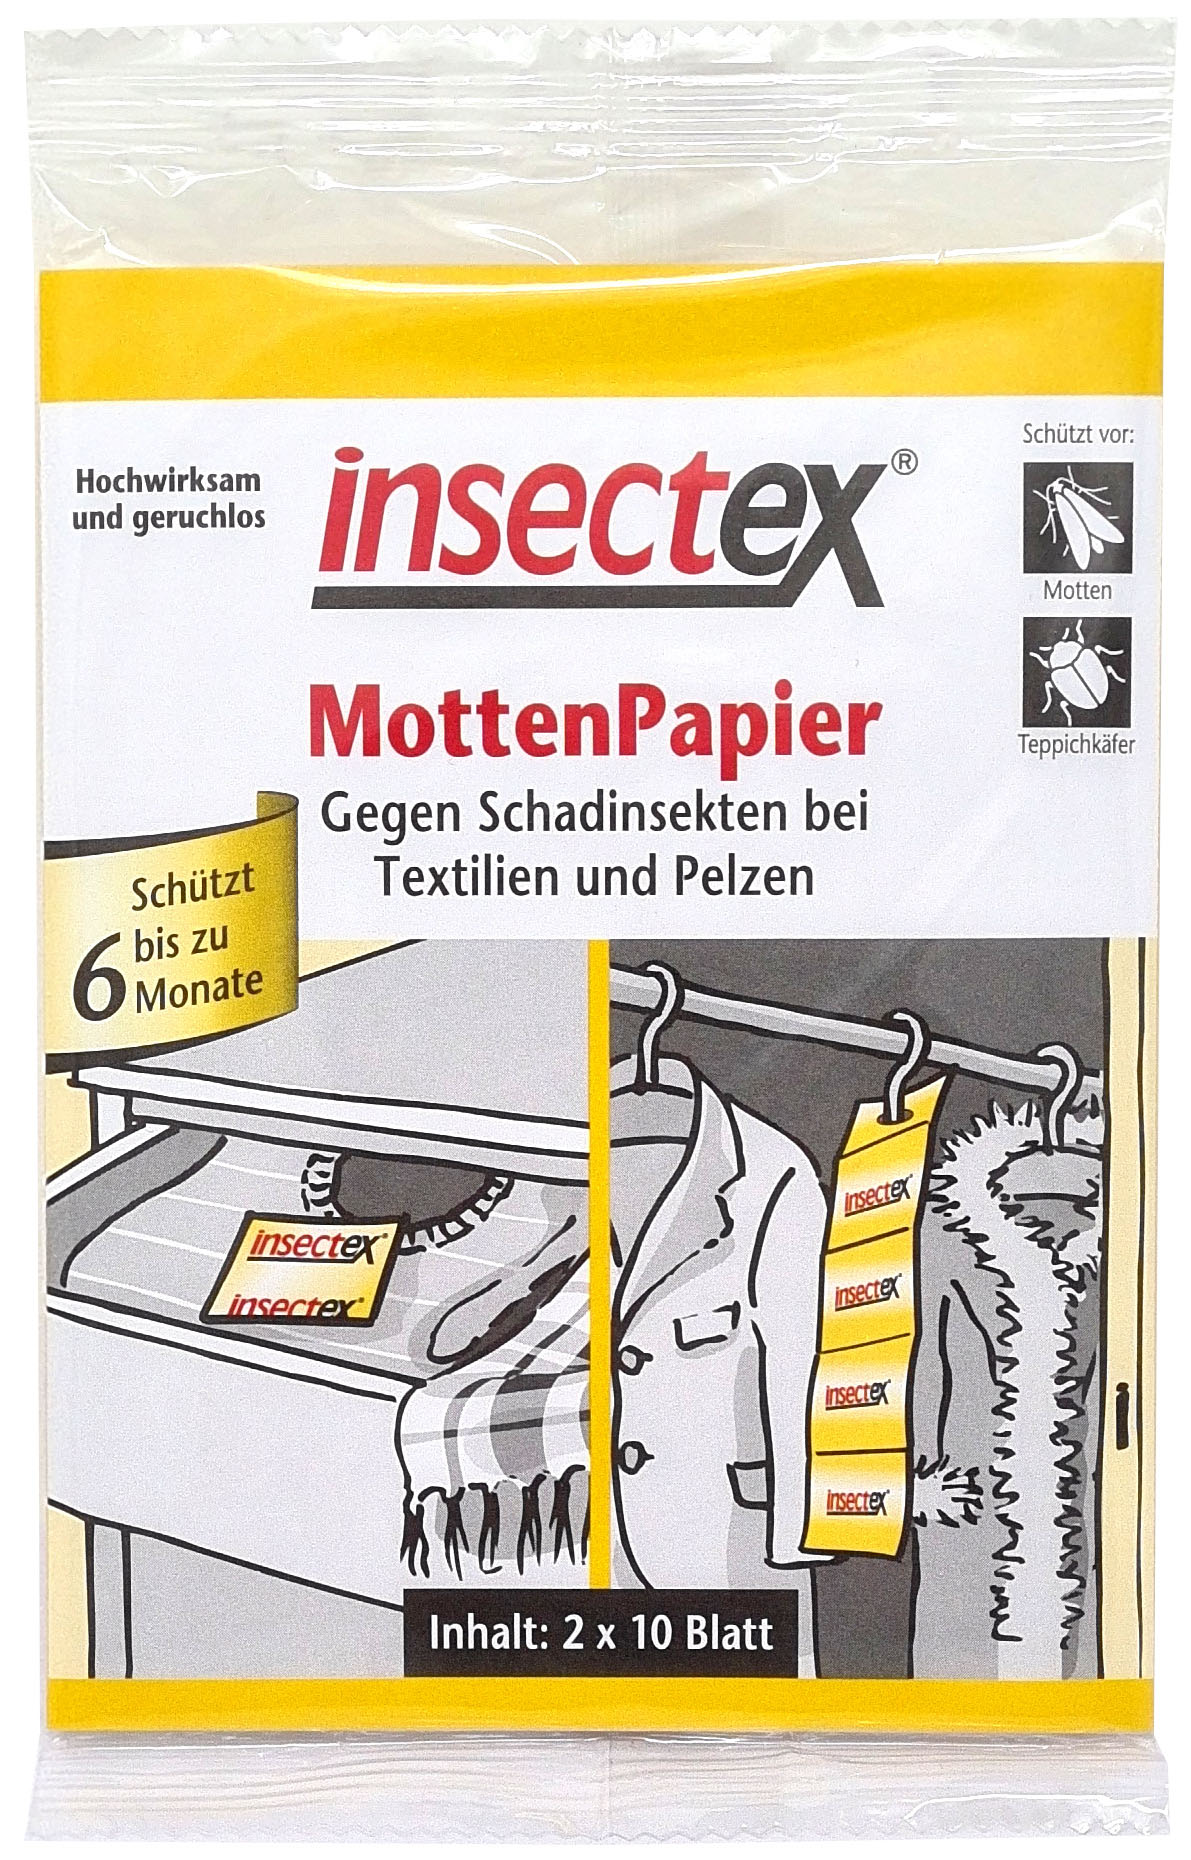 02184 - insectex MottenPapier 2x10 Blatt BIOZID